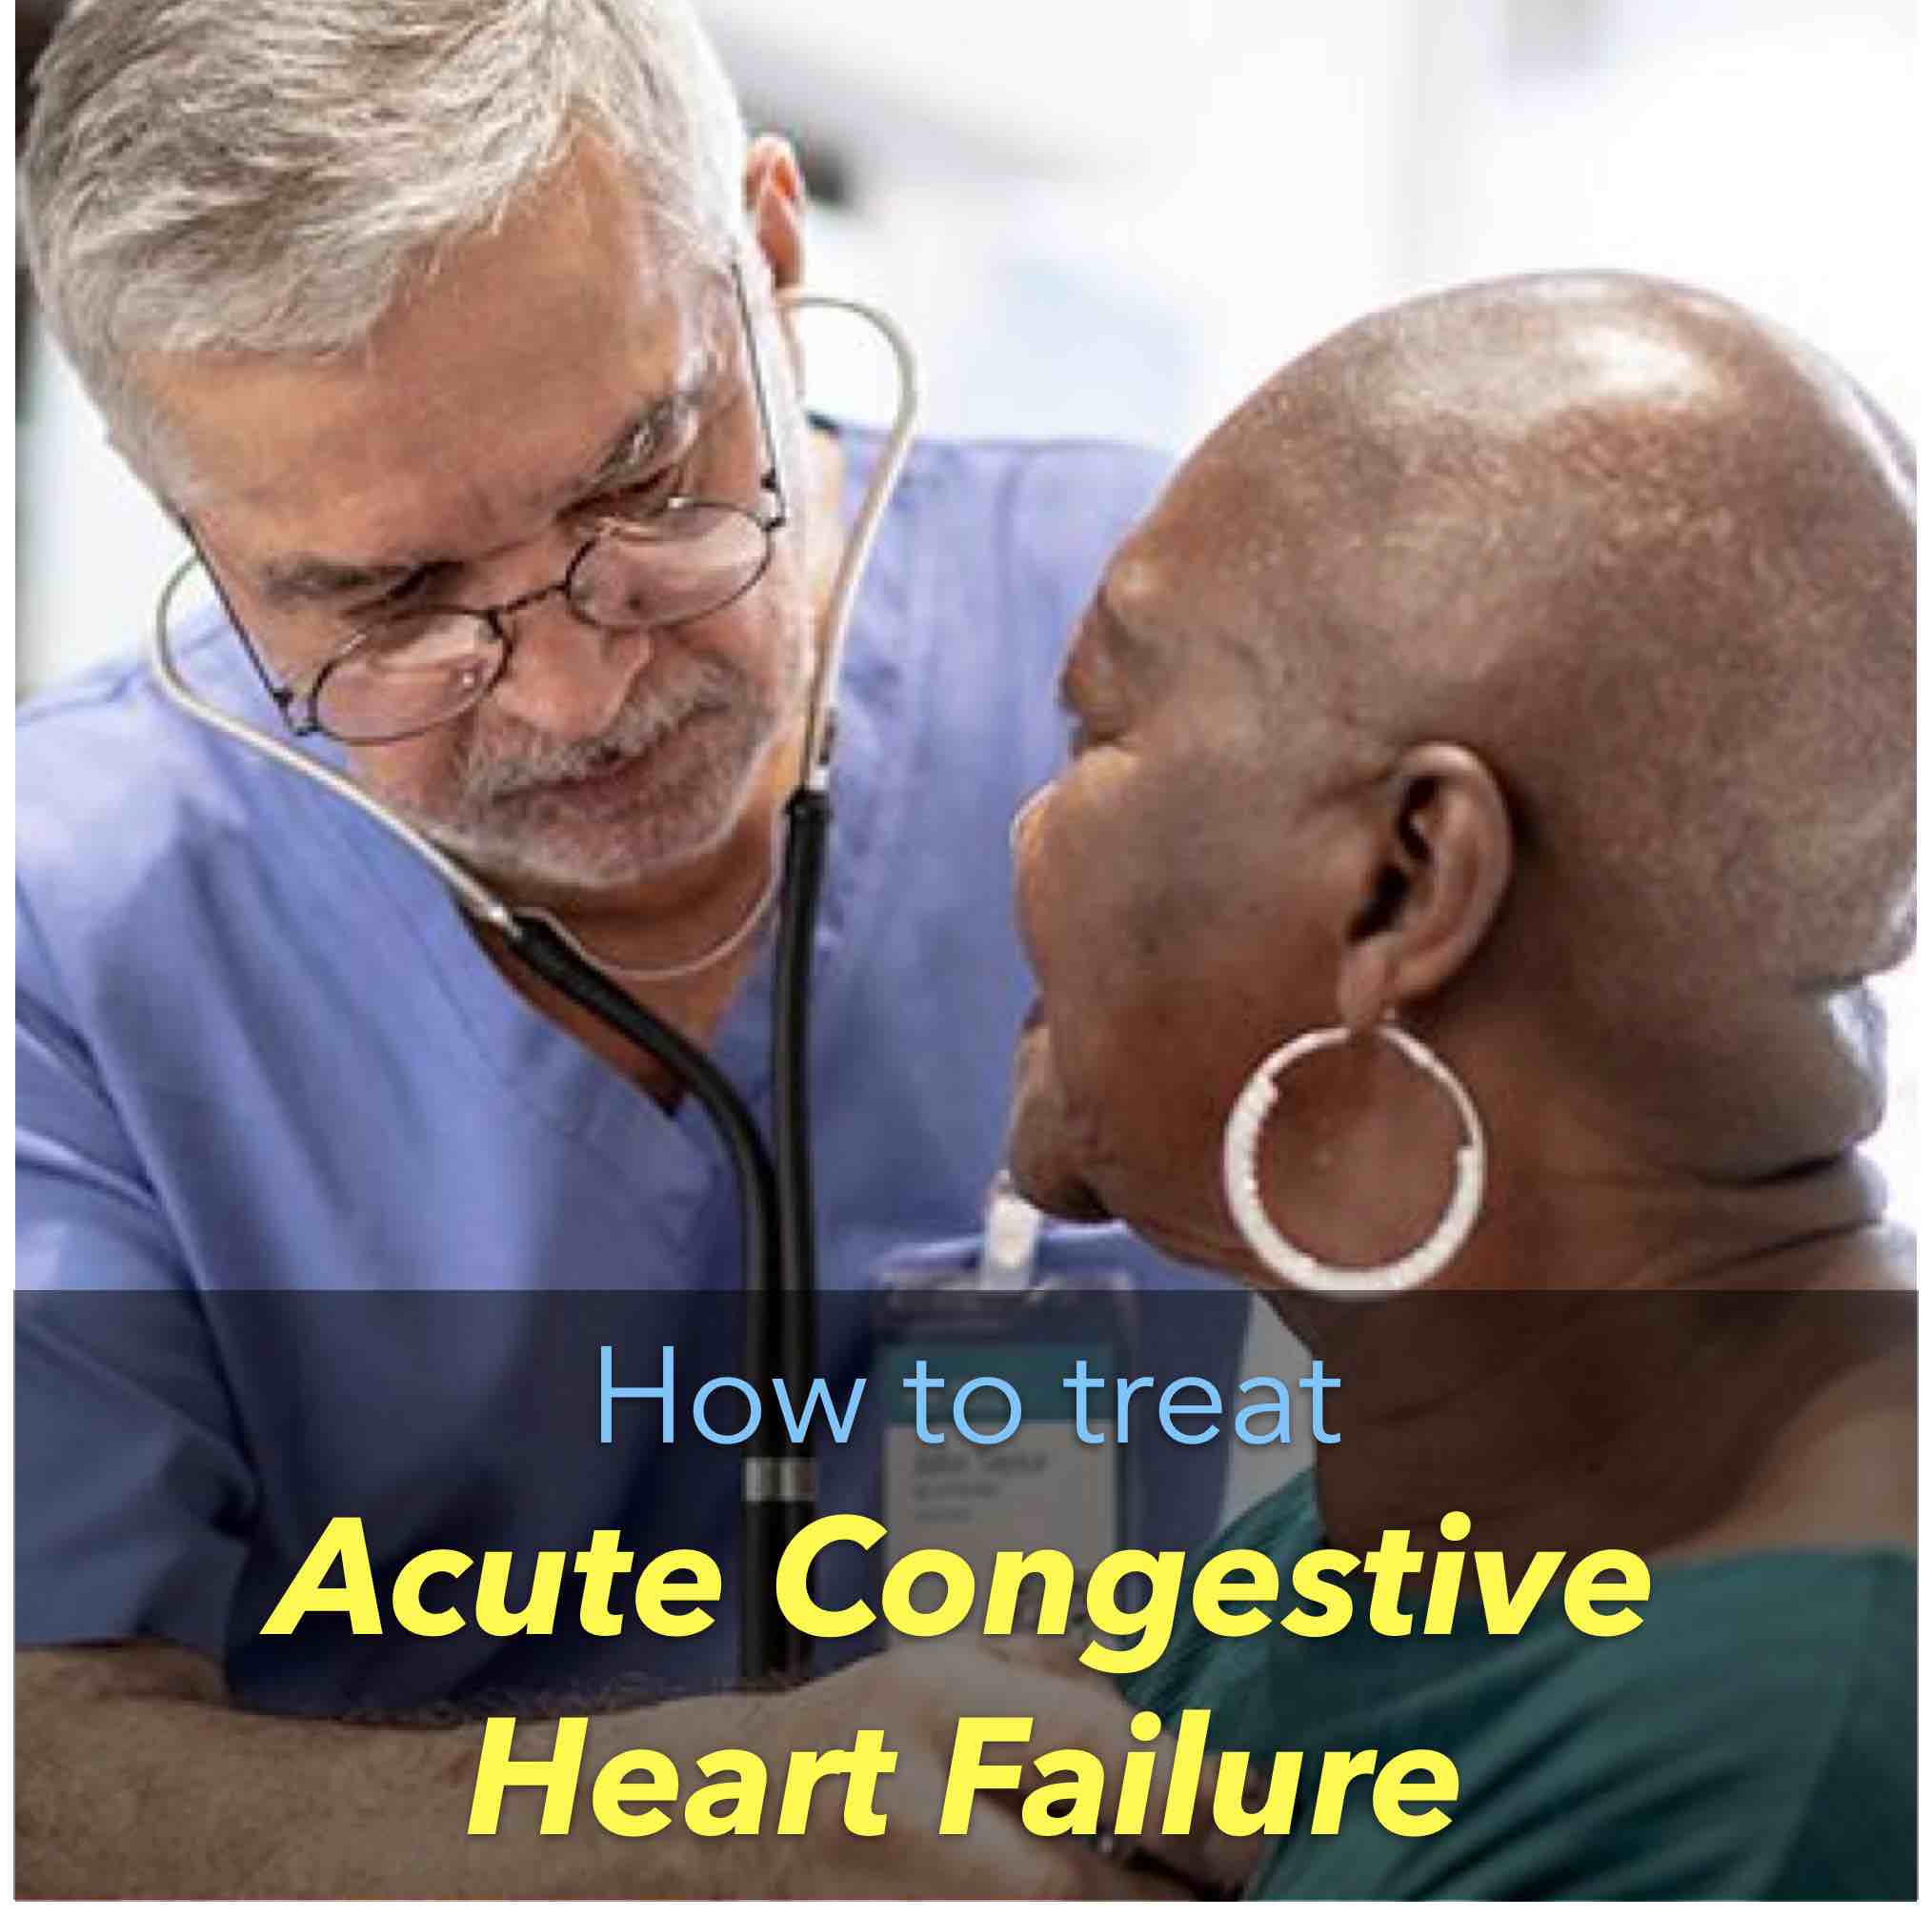 Acute Congestive Heart Failure